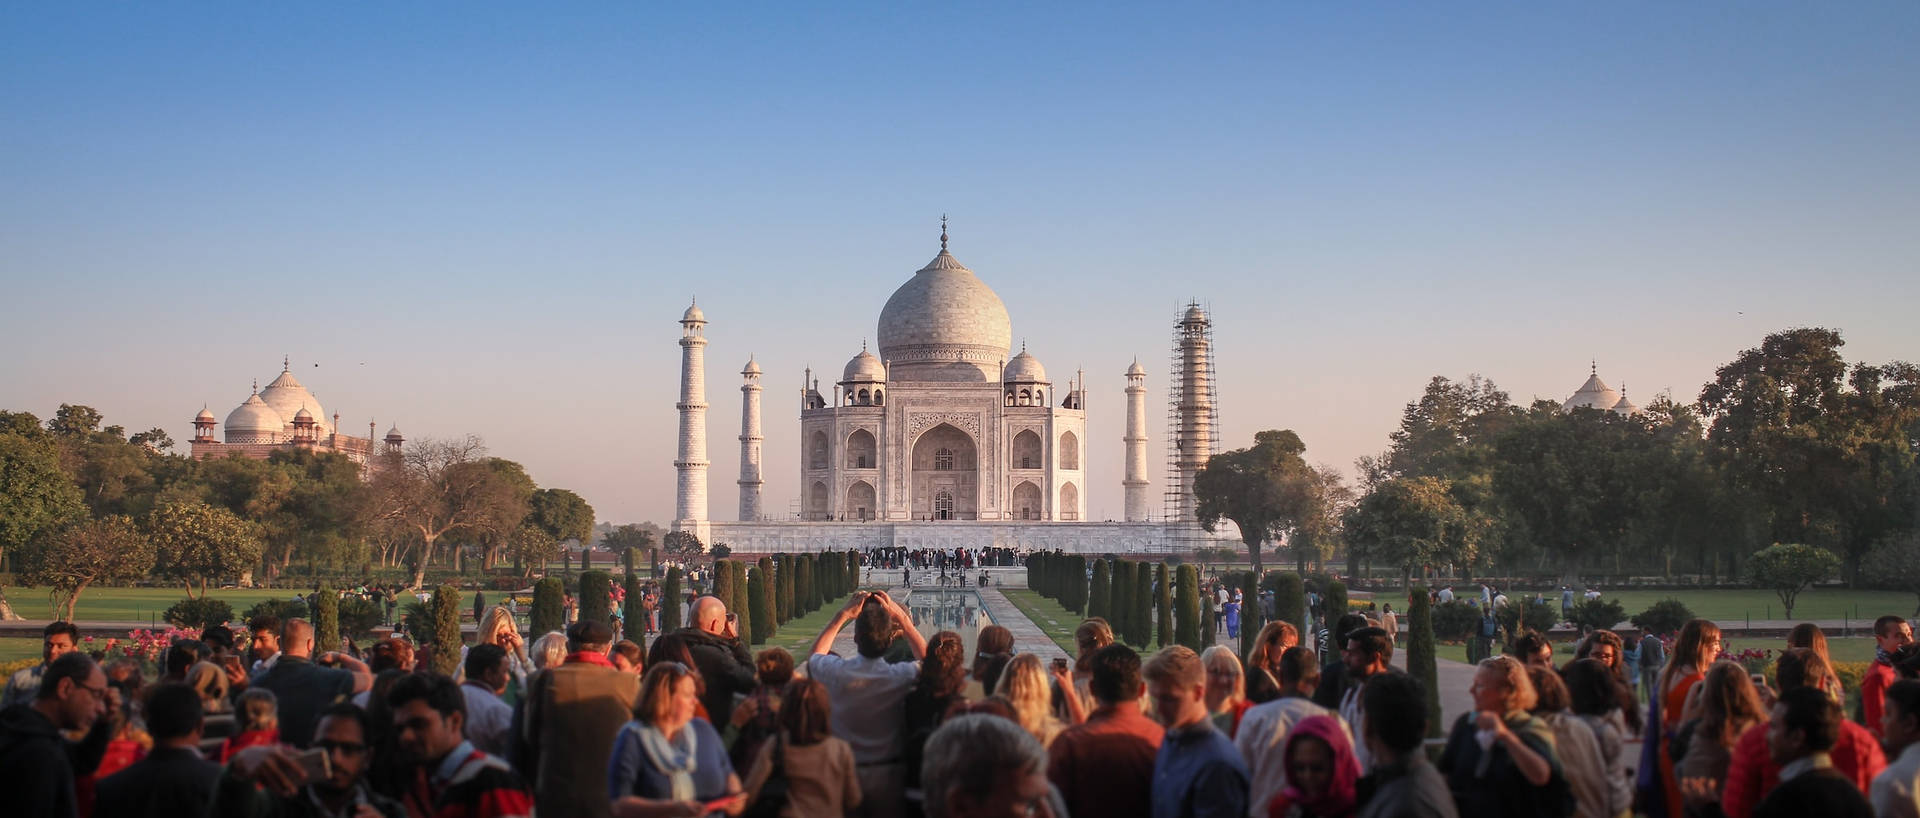 The Taj Mahal And The Tourists Wallpaper